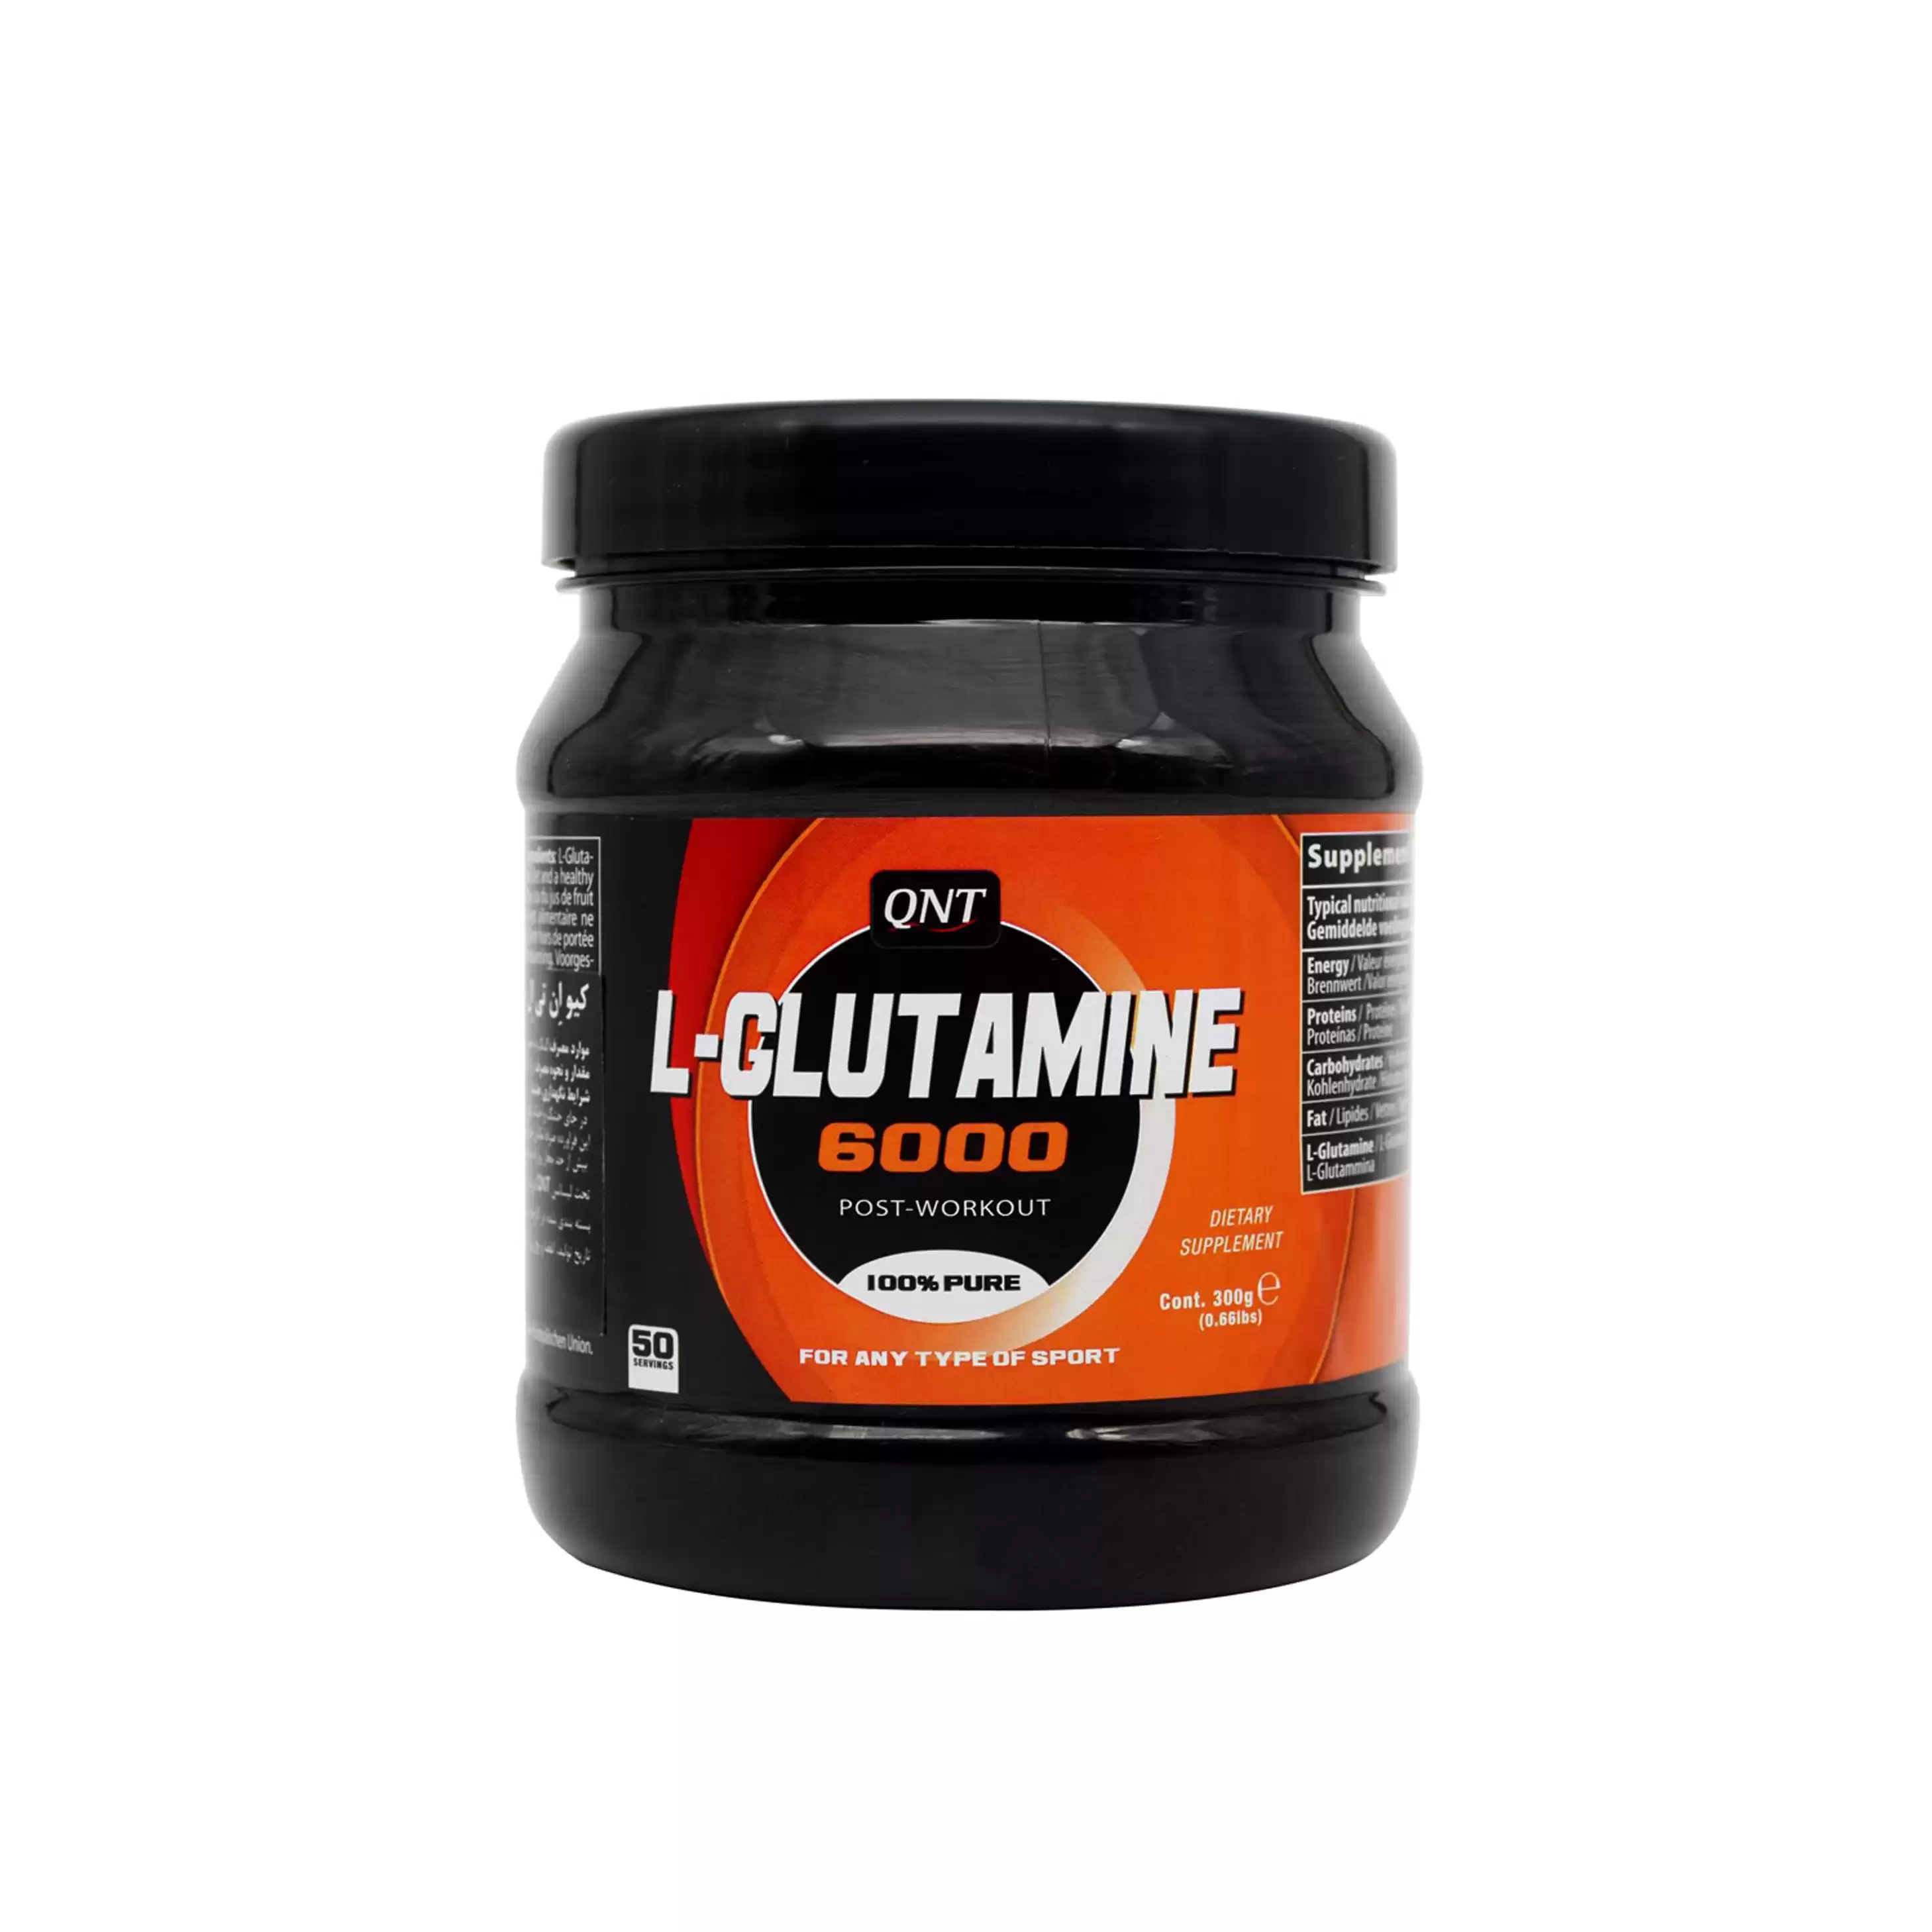 گلوتامین 300 گرم کیو ان تی | QNT L-GLUTAMINE 6000